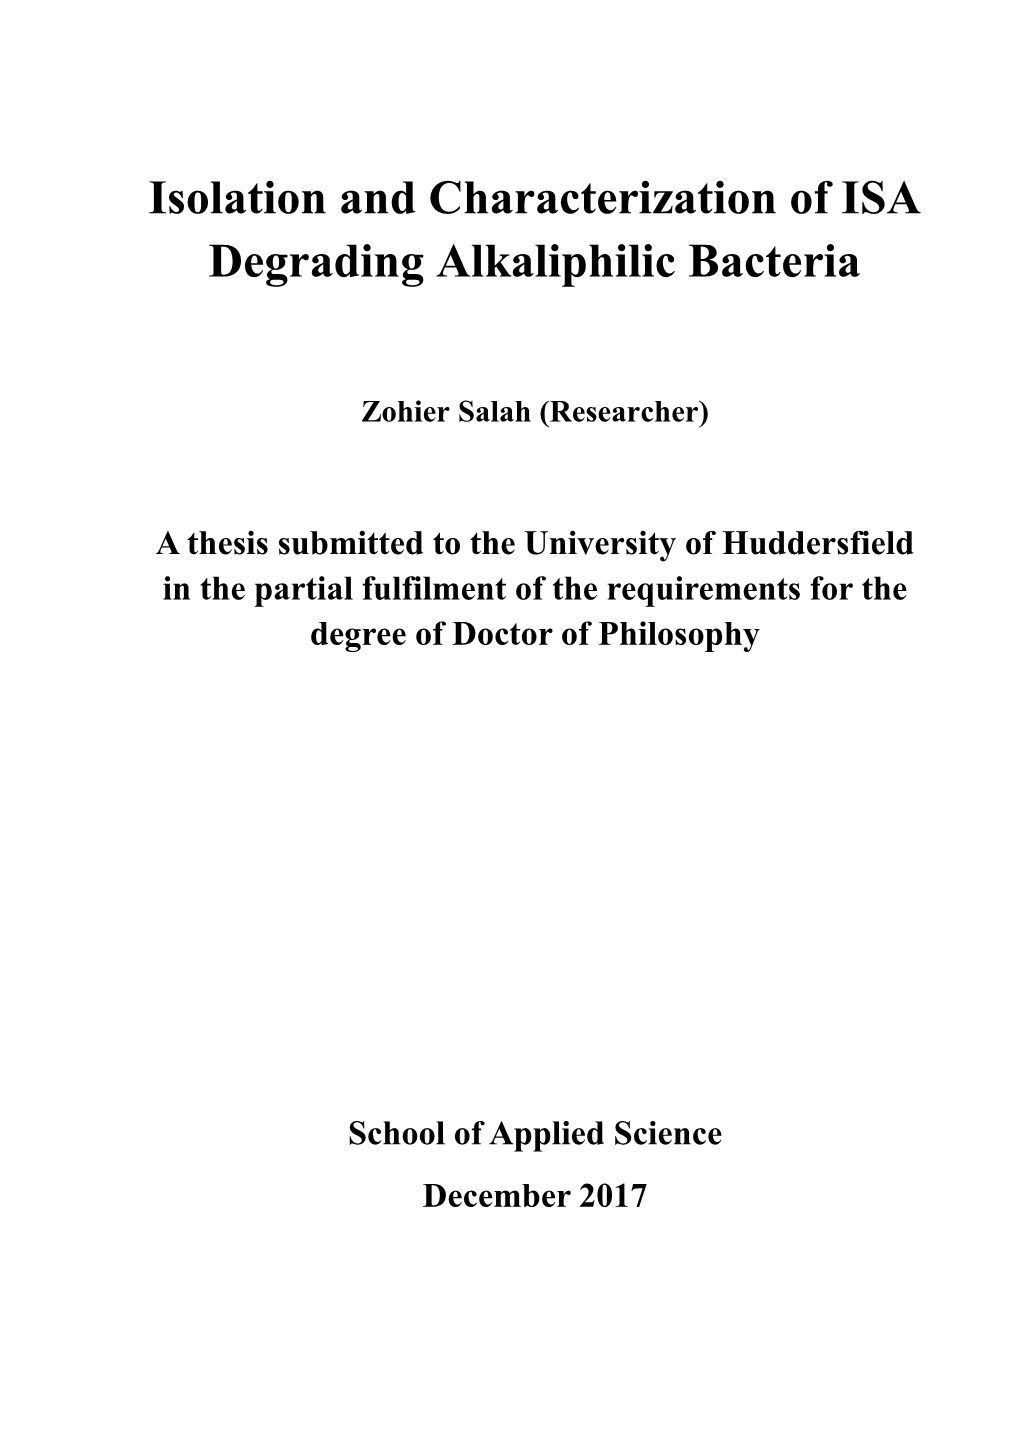 Isolation and Characterization of ISA Degrading Alkaliphilic Bacteria